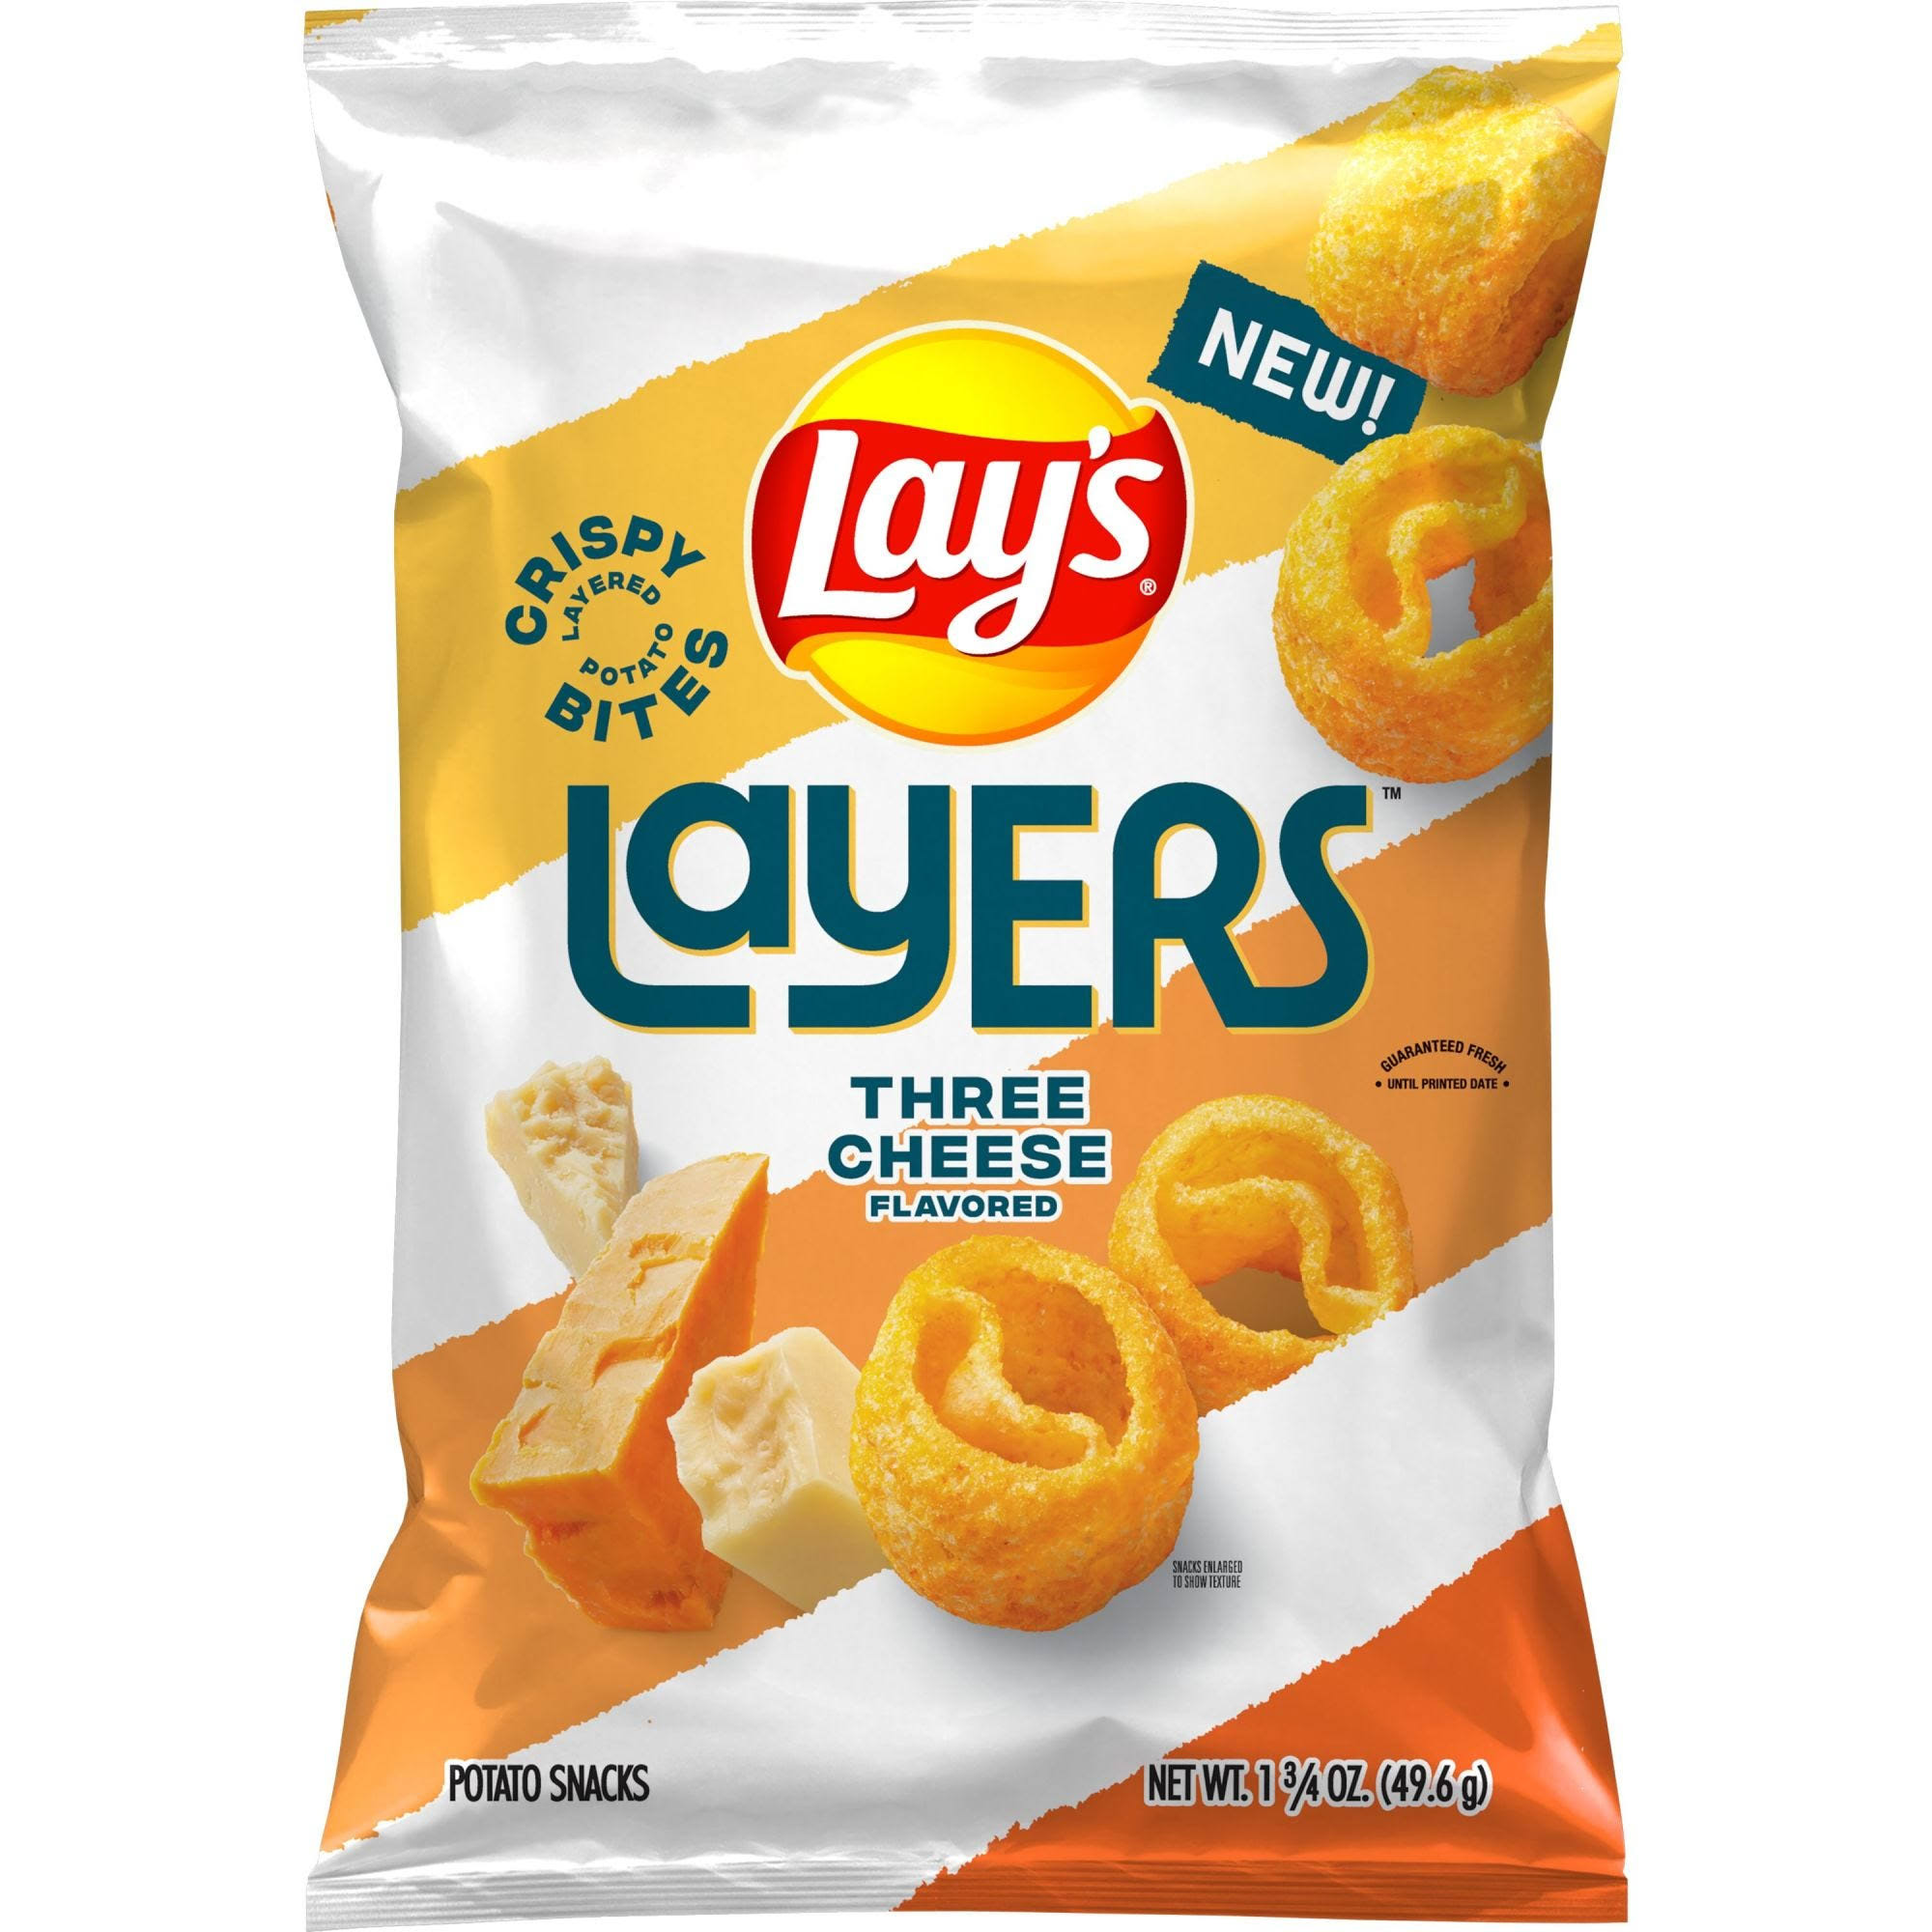 Lay's Layers Potato Snacks, Three Cheese Flavored - 1.75 oz